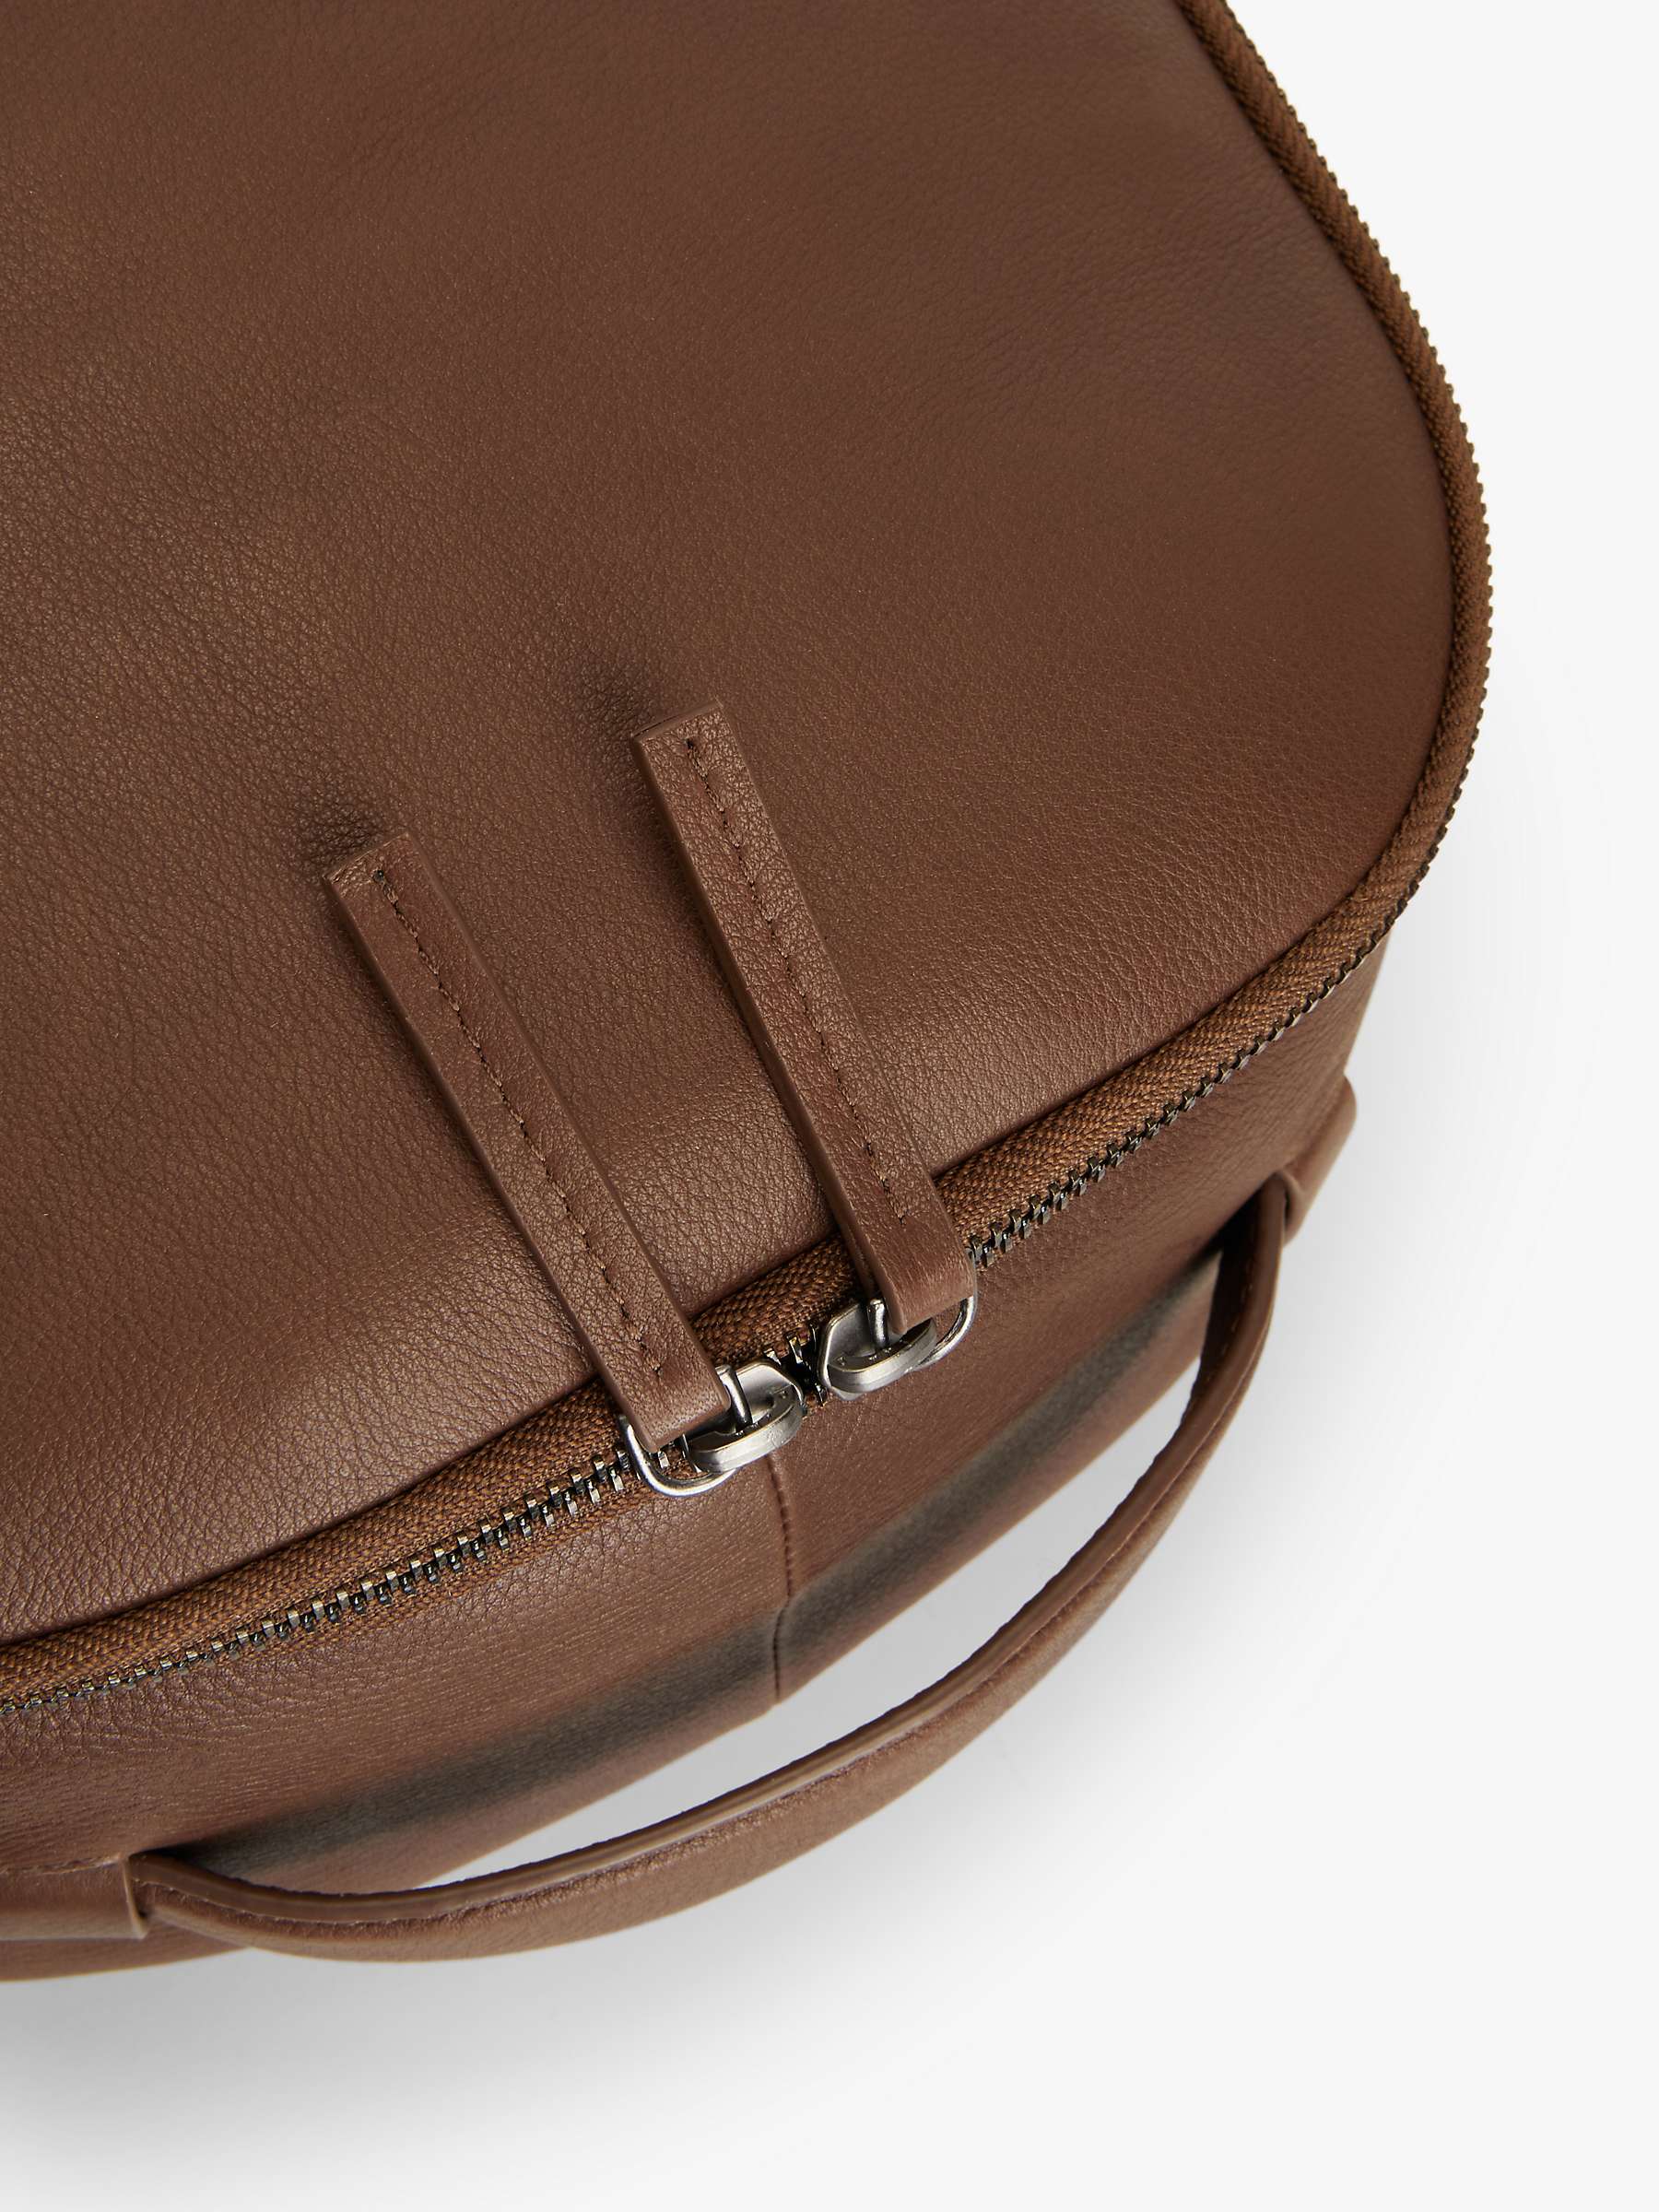 Buy John Lewis Oslo Leather Backpack Online at johnlewis.com